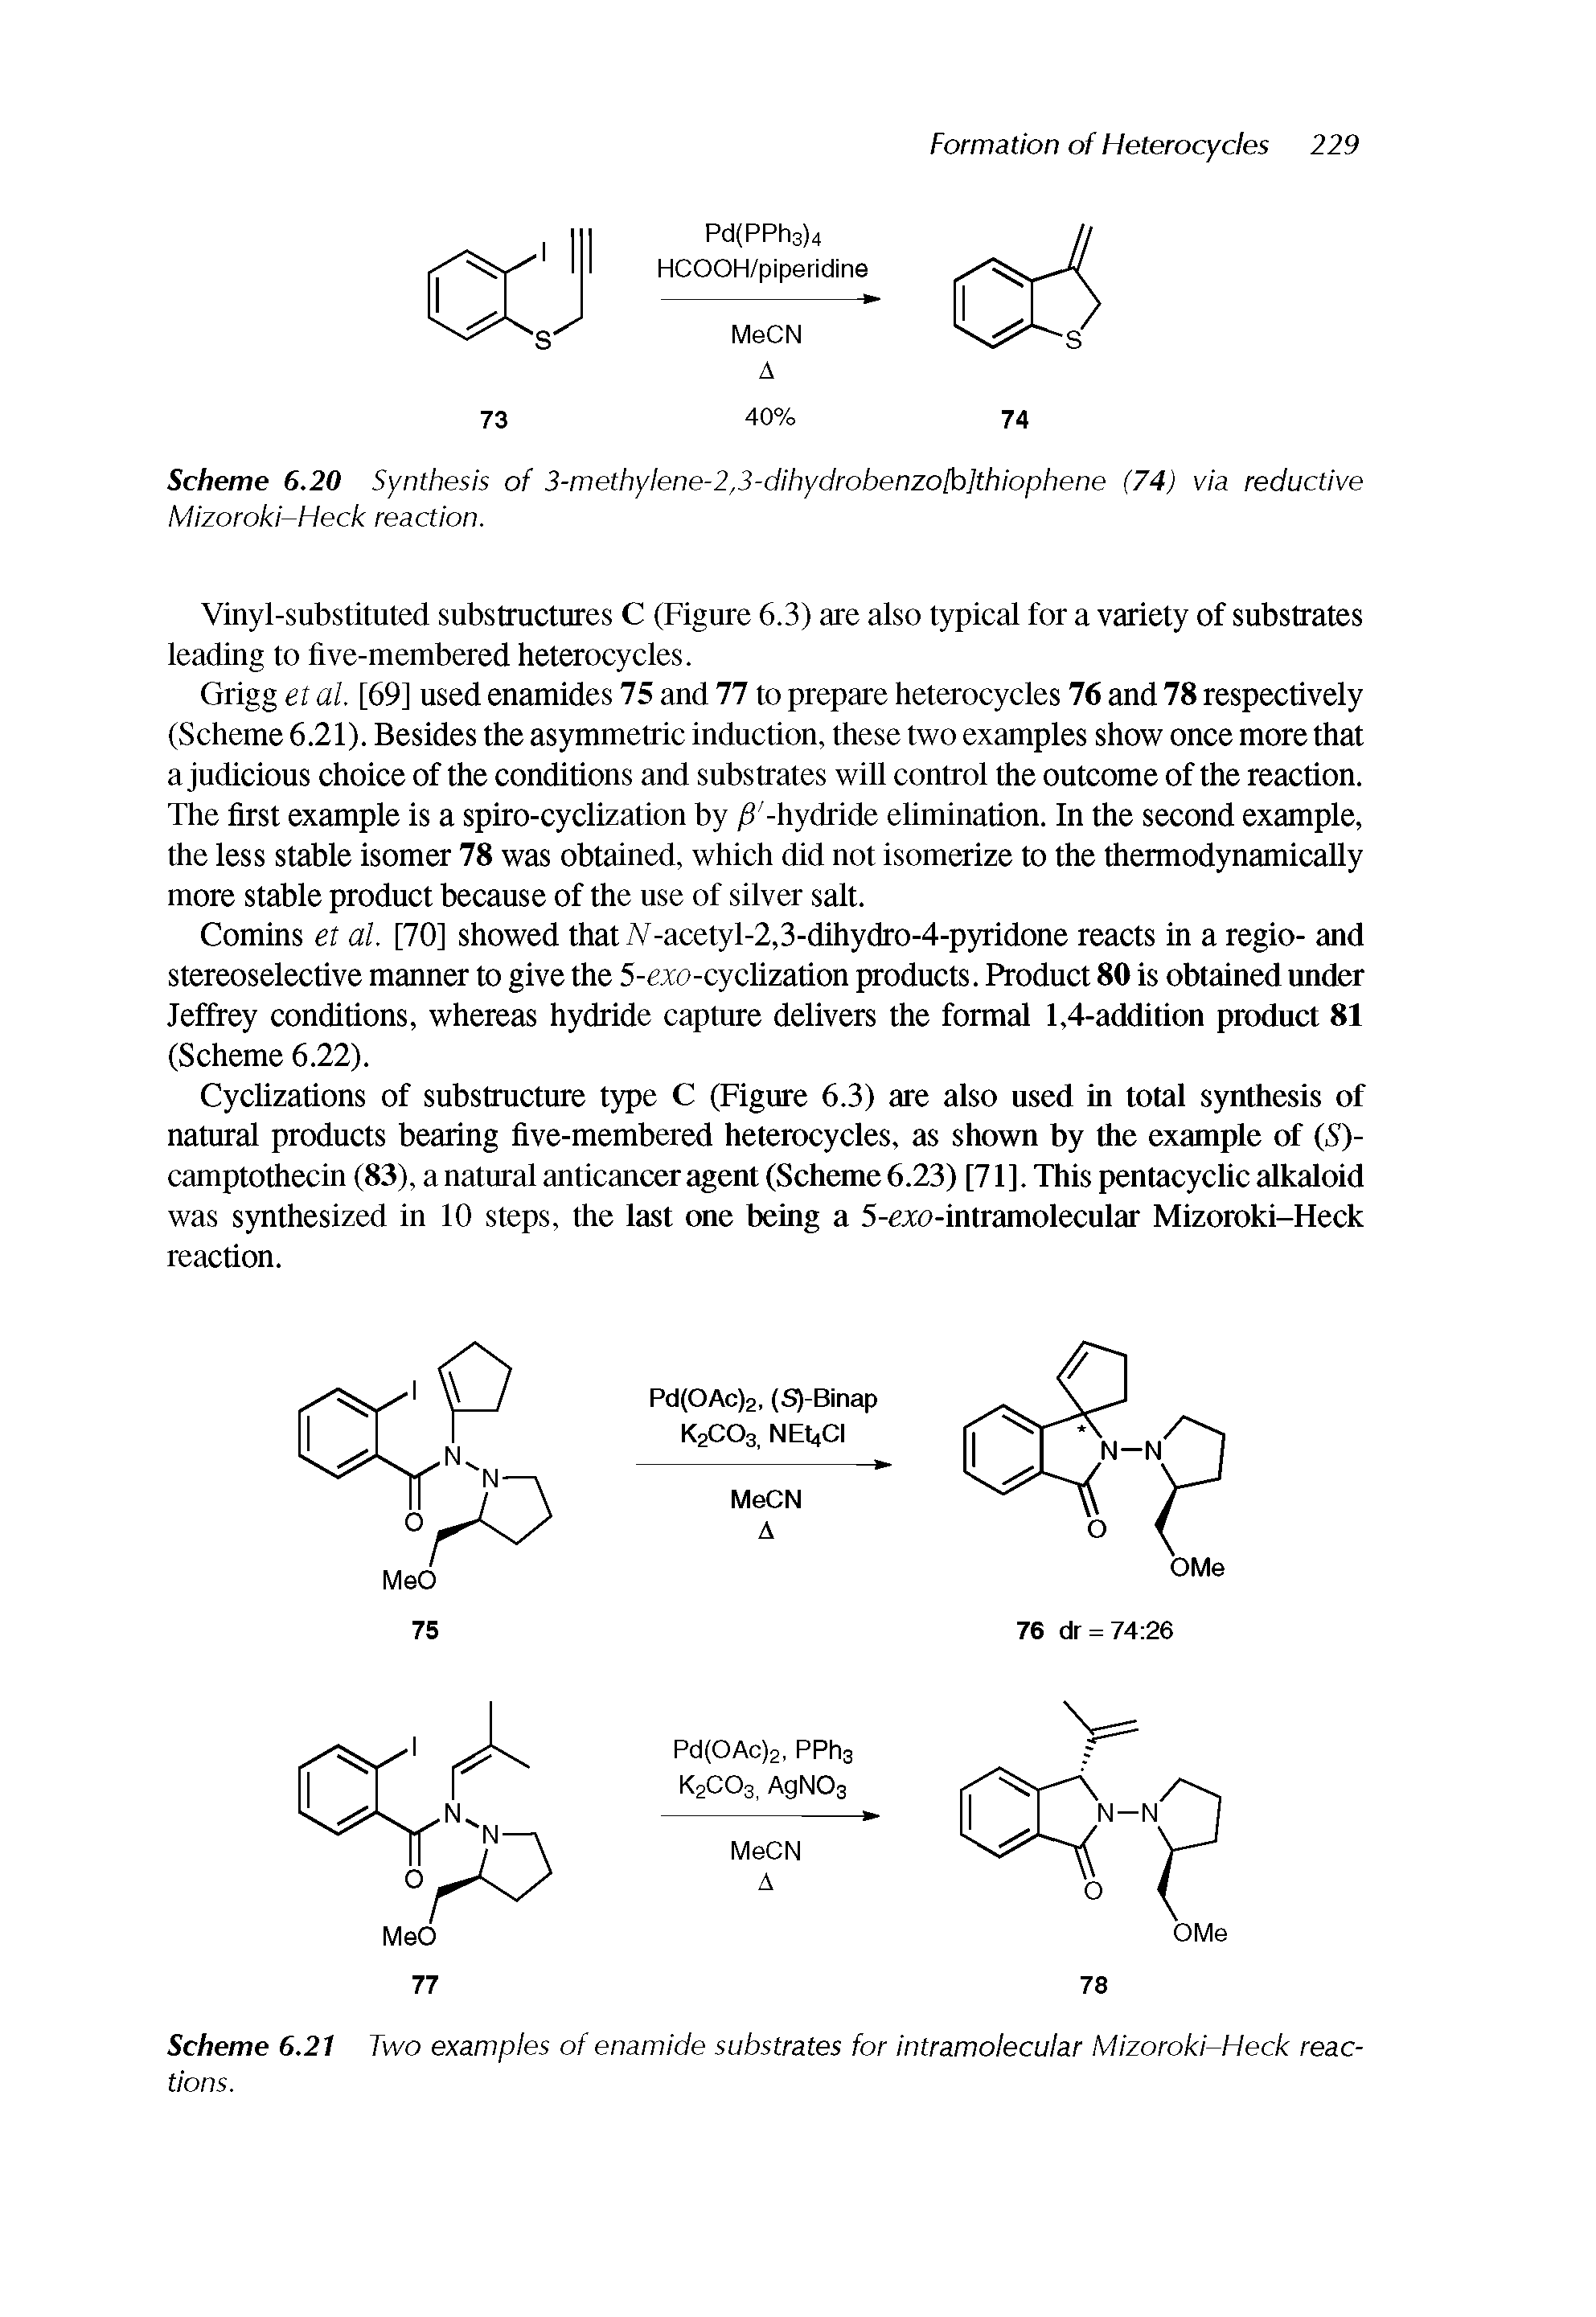 Scheme 6.21 Two examples of enamide substrates for intramolecular Mizoroki-Heck reactions.